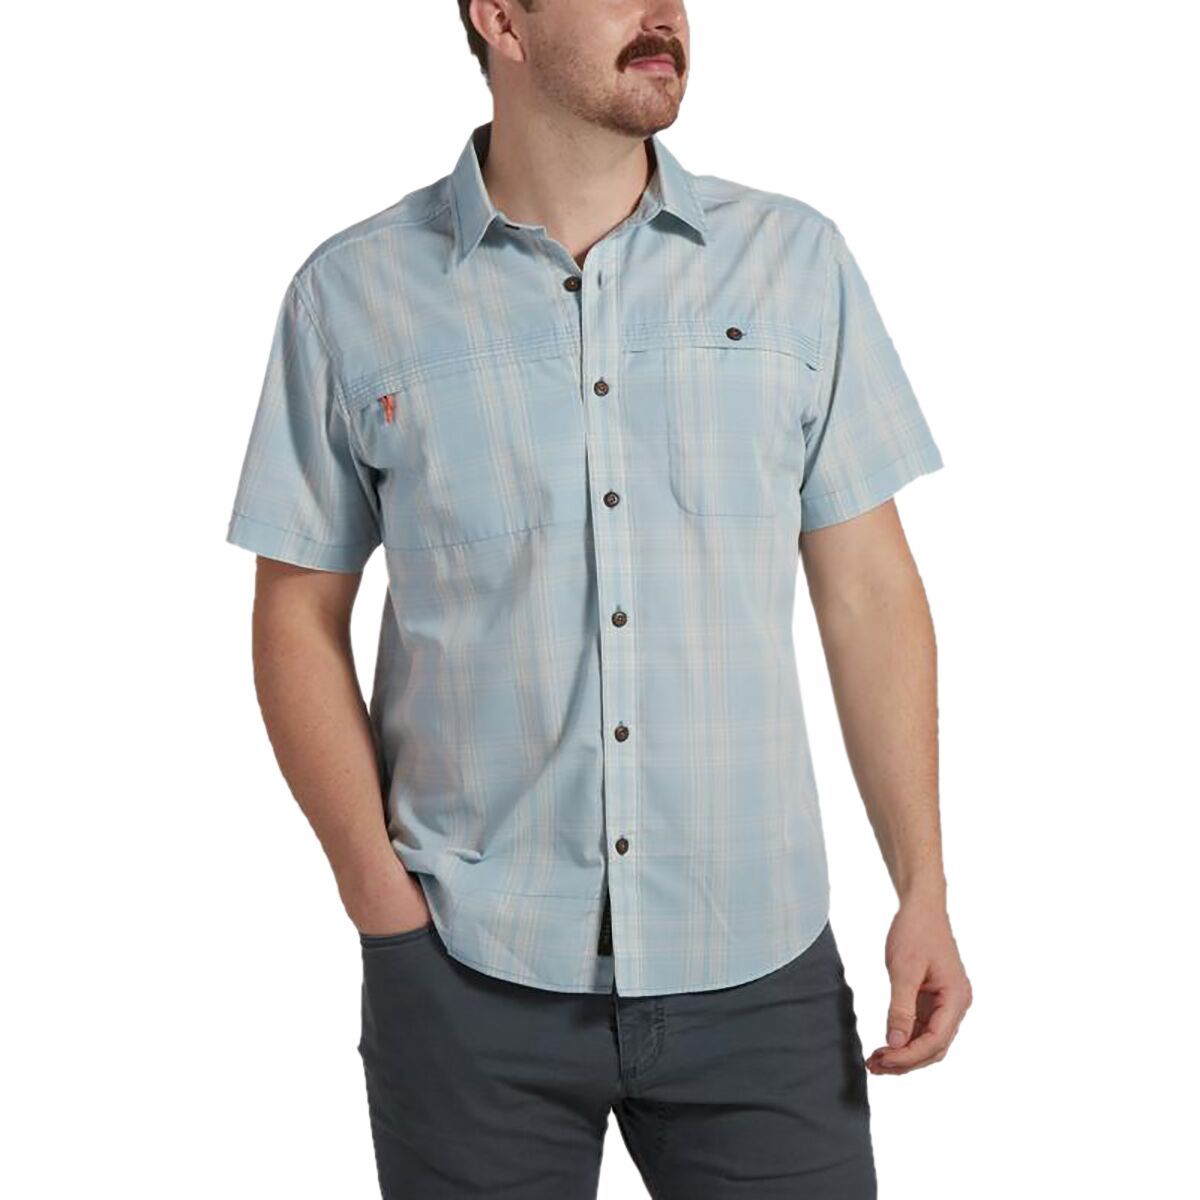 Howler Brothers Tidepool Tech Short-Sleeve Shirt - Men's | Backcountry.com